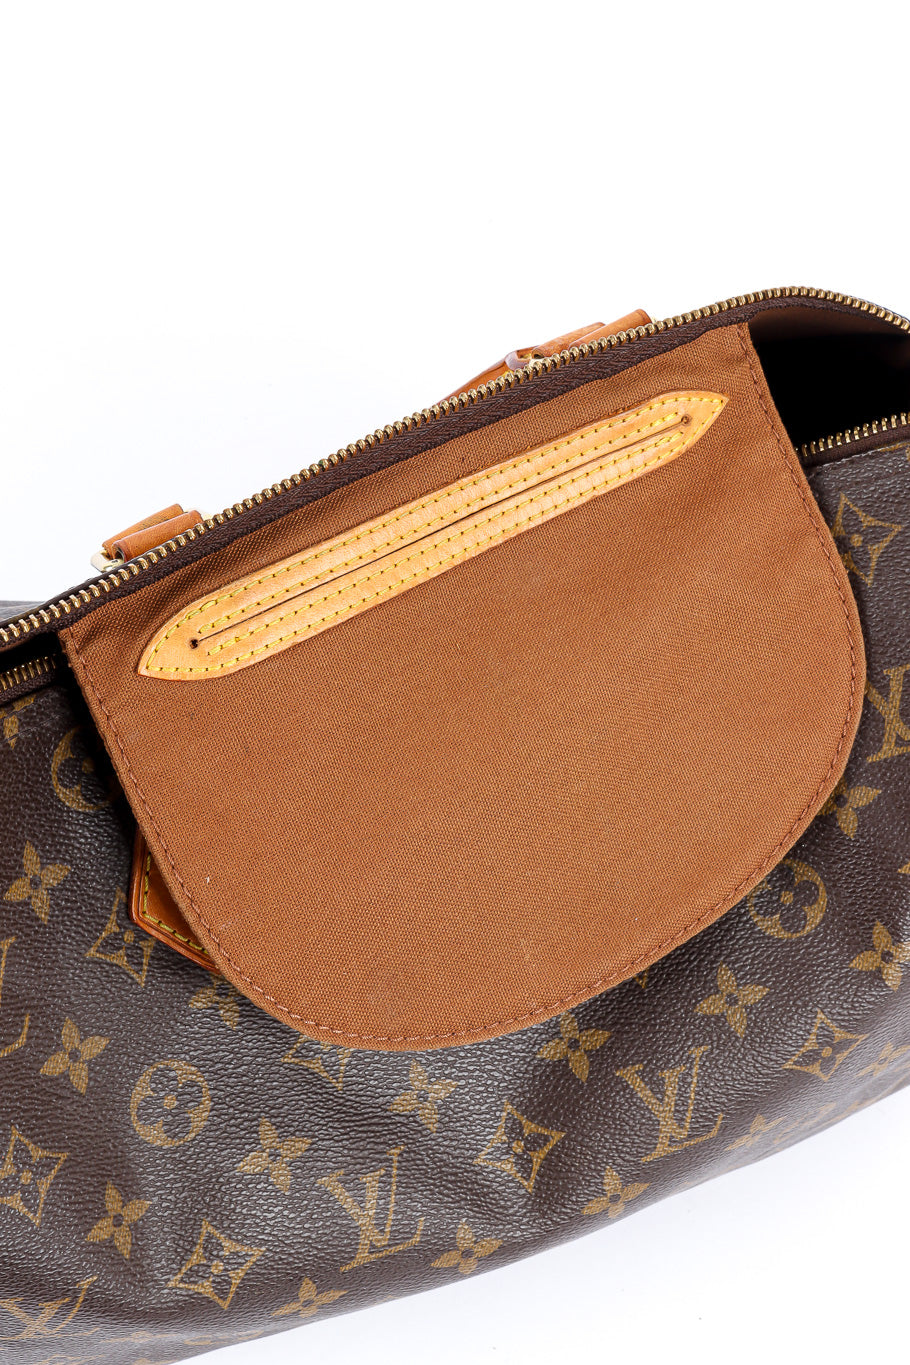 Louis Vuitton classic monogram speedy 30 bag inside pocket full detail @recessla